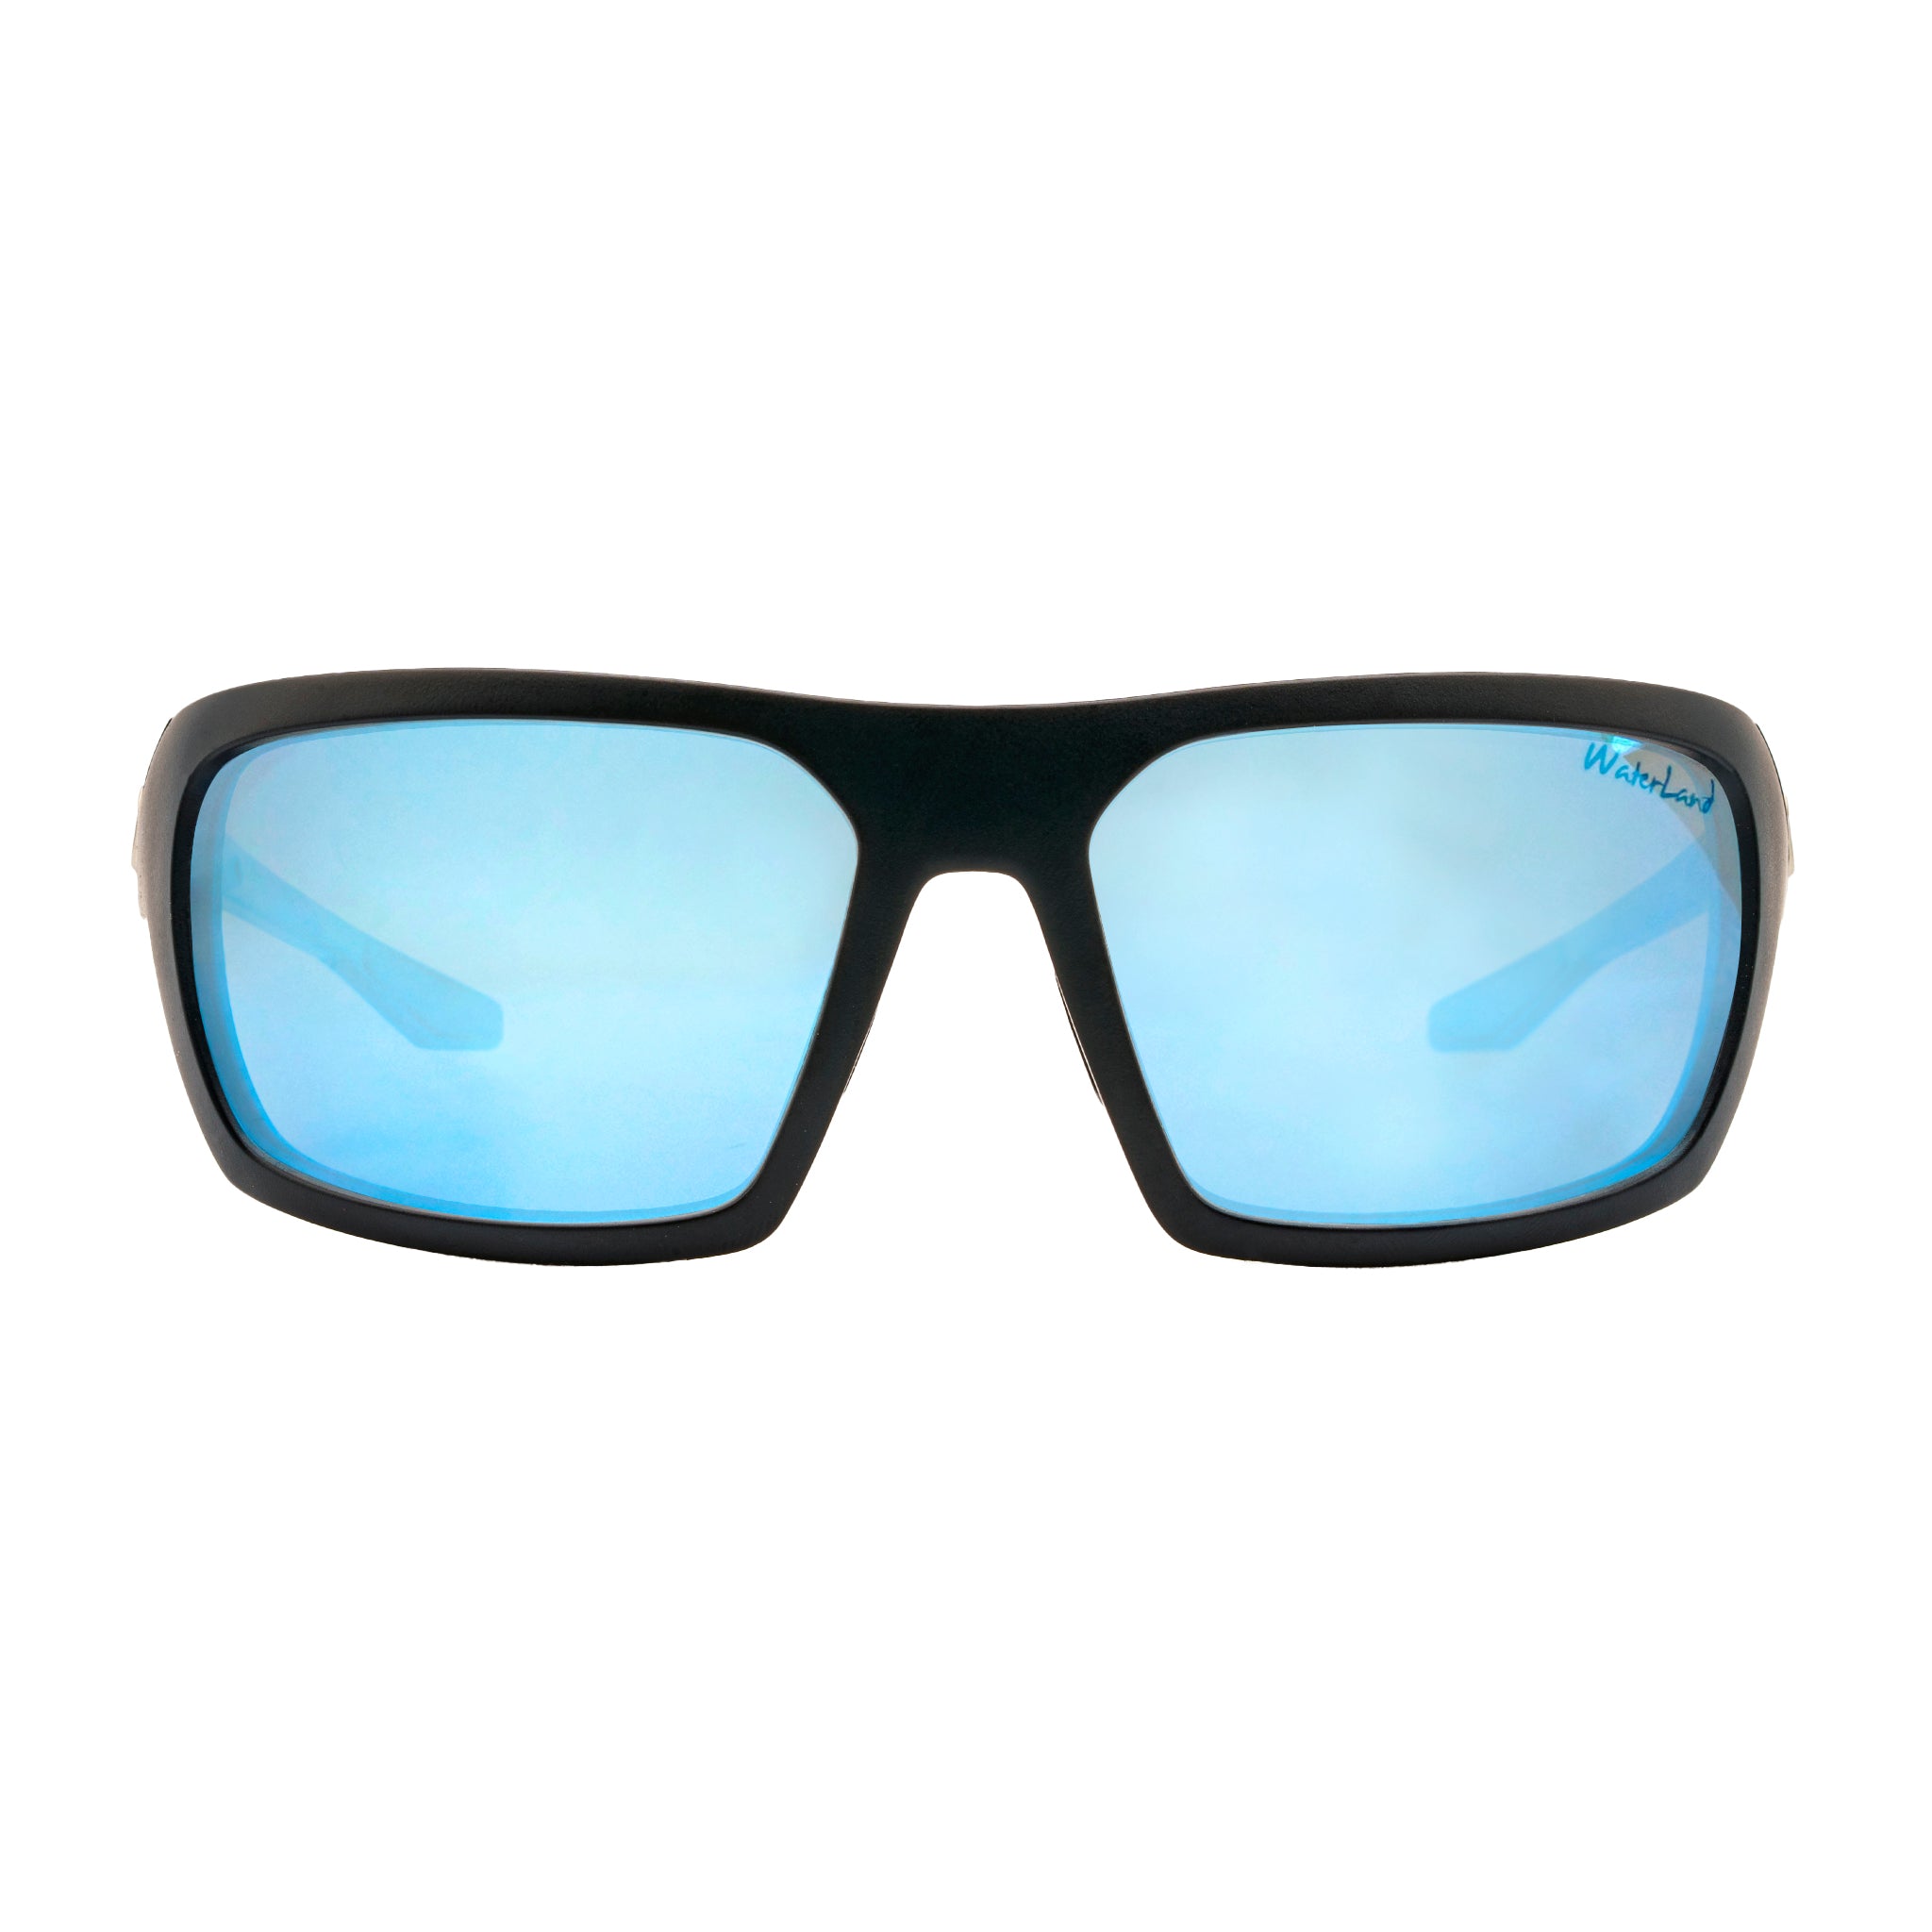 Waterland Fishing Sunglasses Milliken / Waterwood / Golden Light Glass